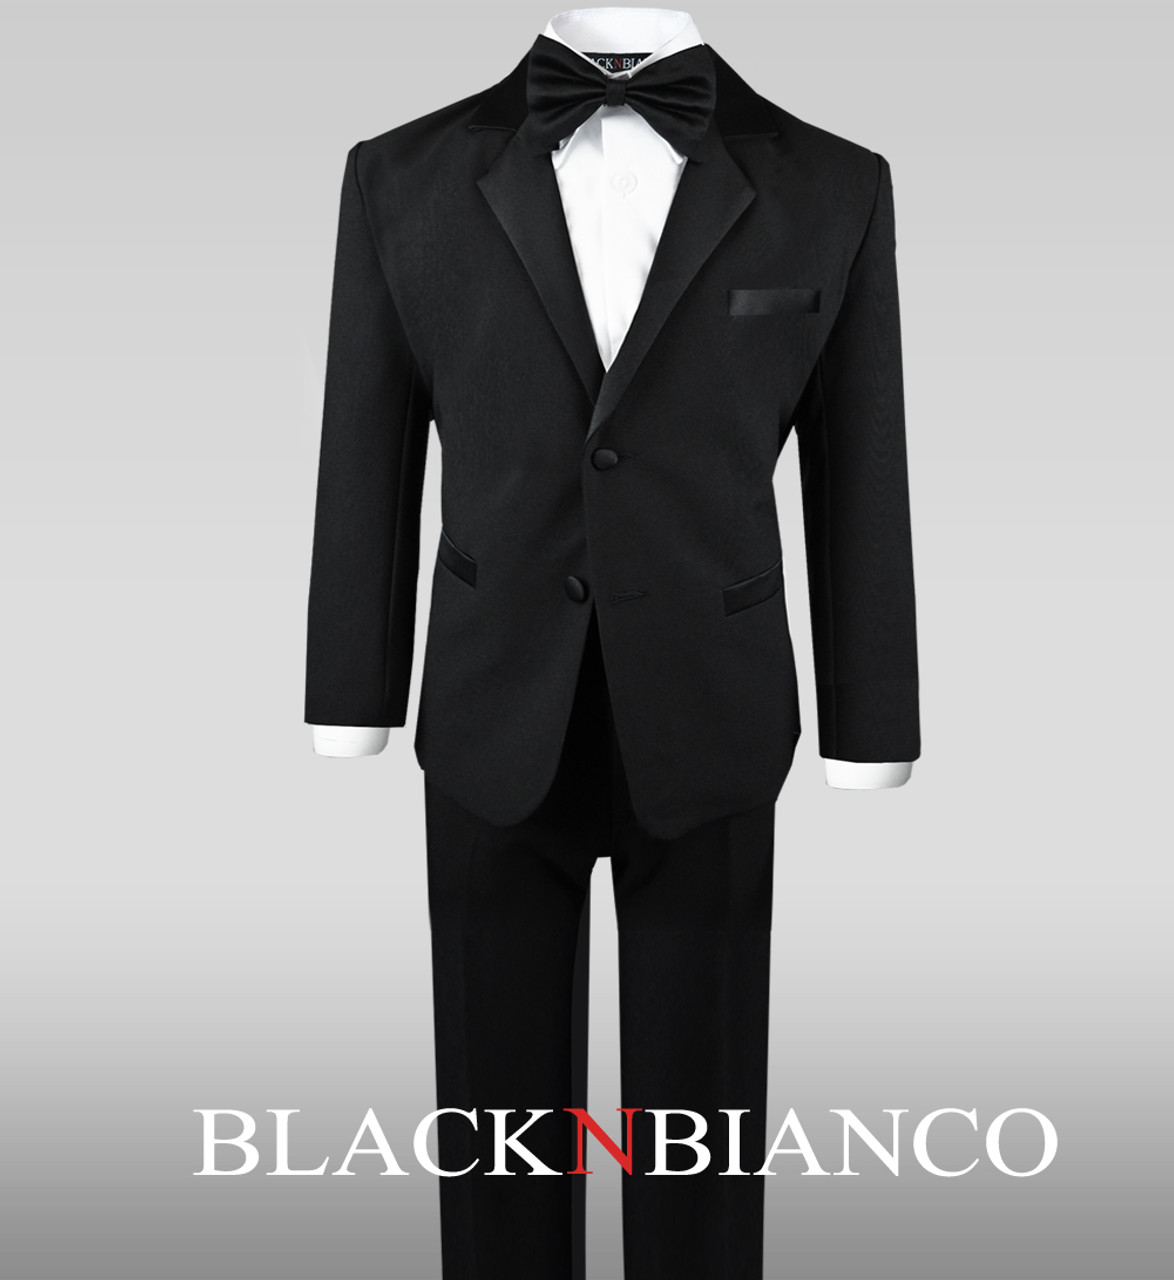 Black Wedding Tuxedo Dresswear Outfit Set with Bow Tie